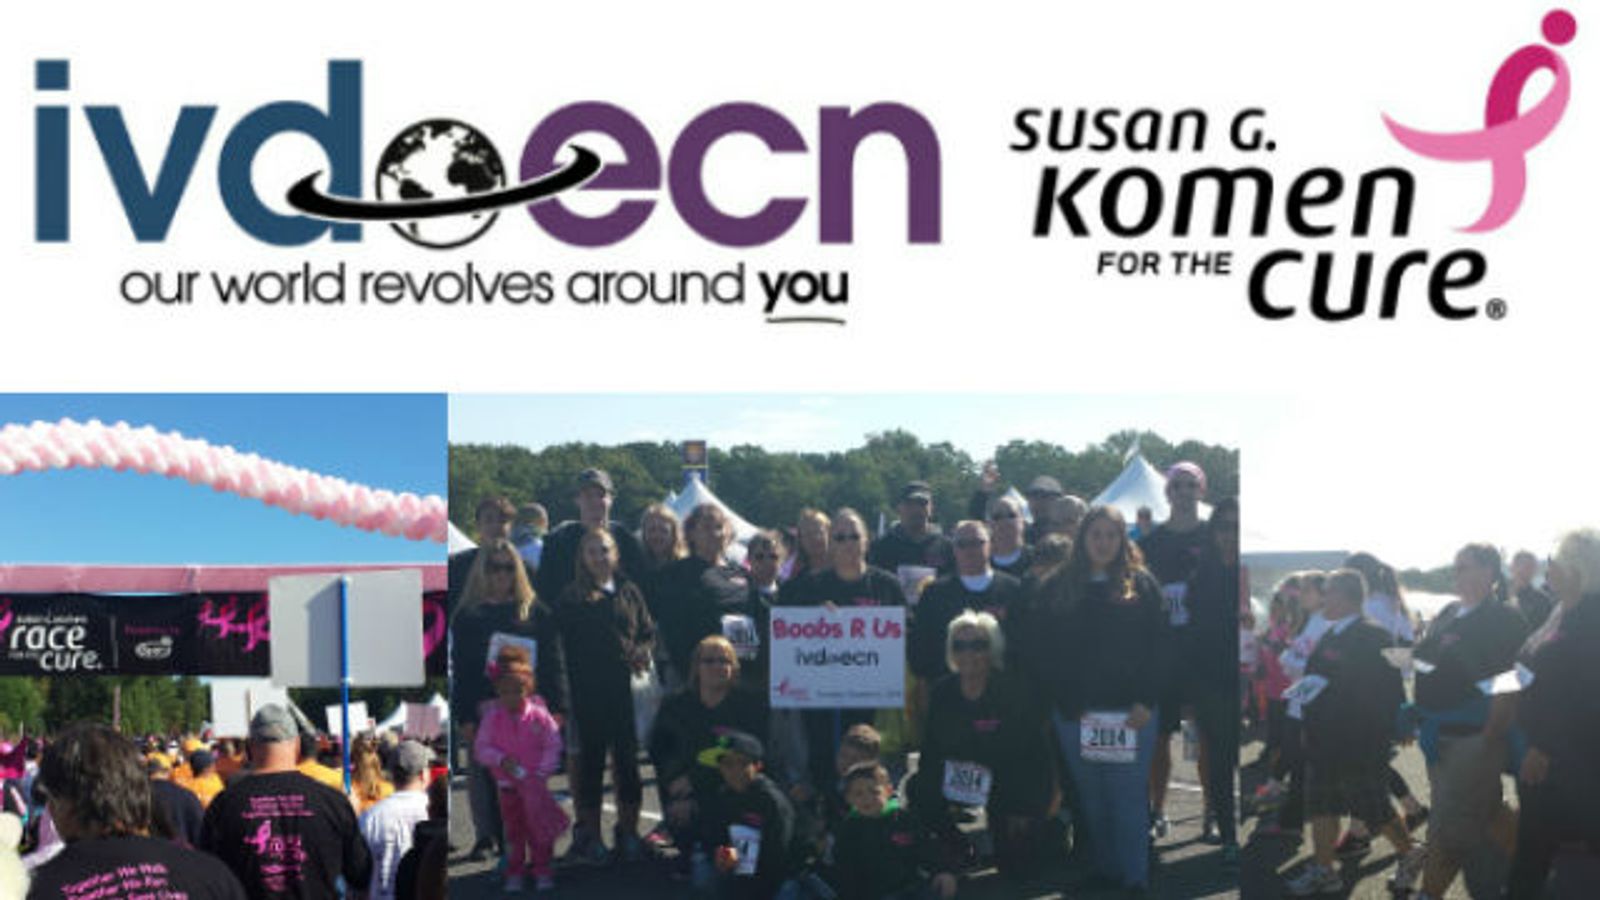 IVD/ECN Participates in Susan G. Komen Race for the Cure 2014